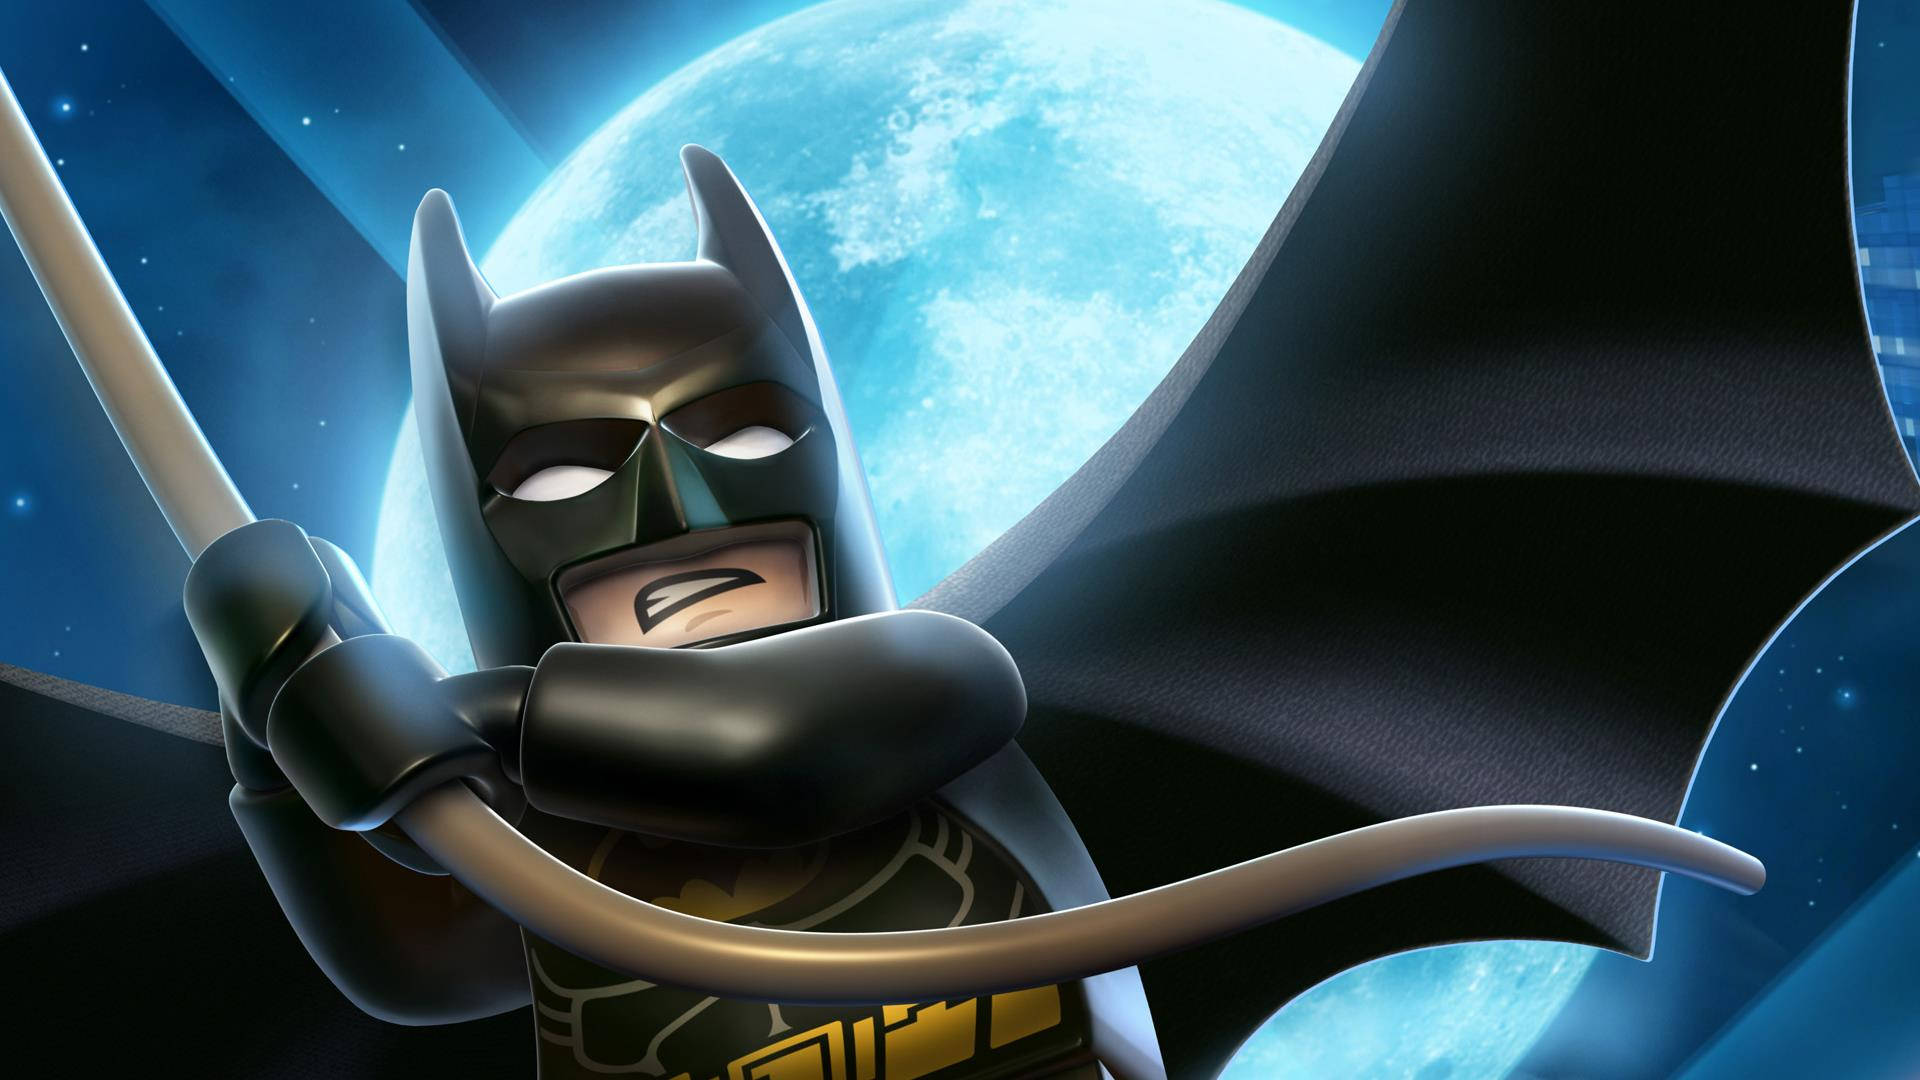 Download Batman In Action In The Lego Batman Movie Wallpaper | Wallpapers .com